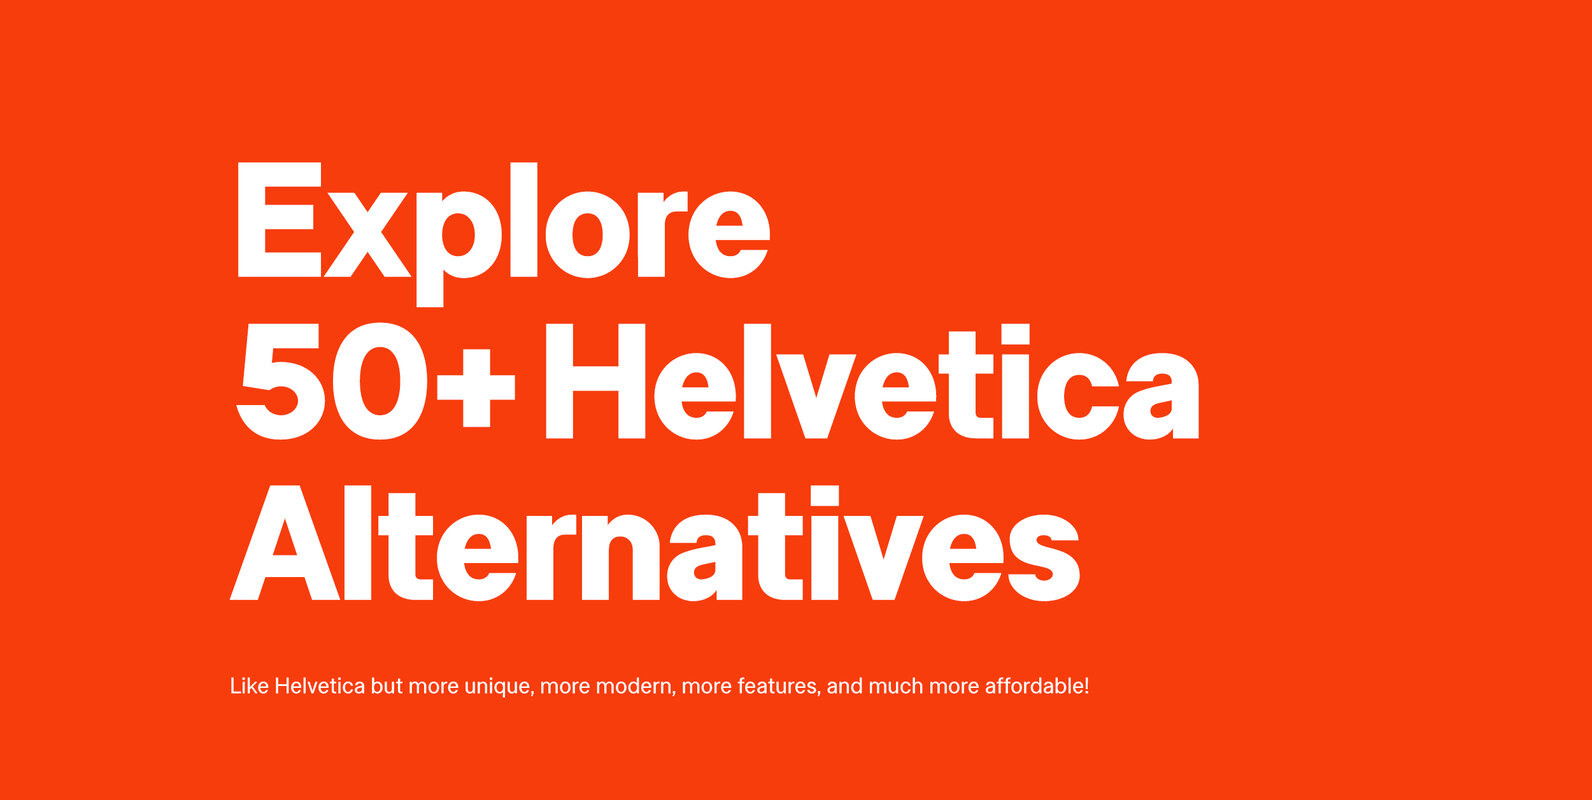 The Top 50 Helvetica Alternatives